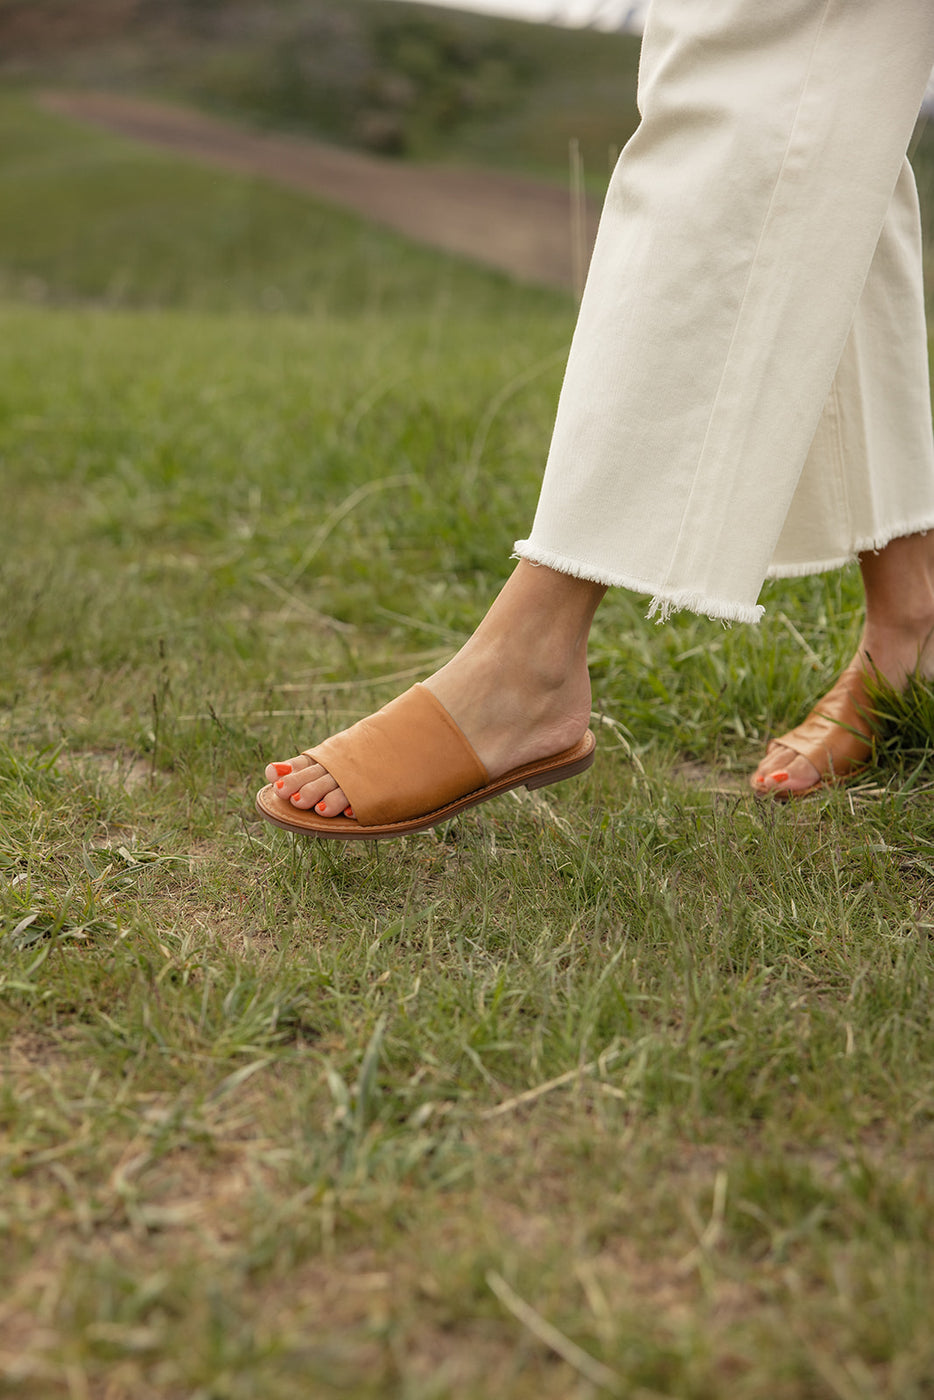 a person's feet in a grass field